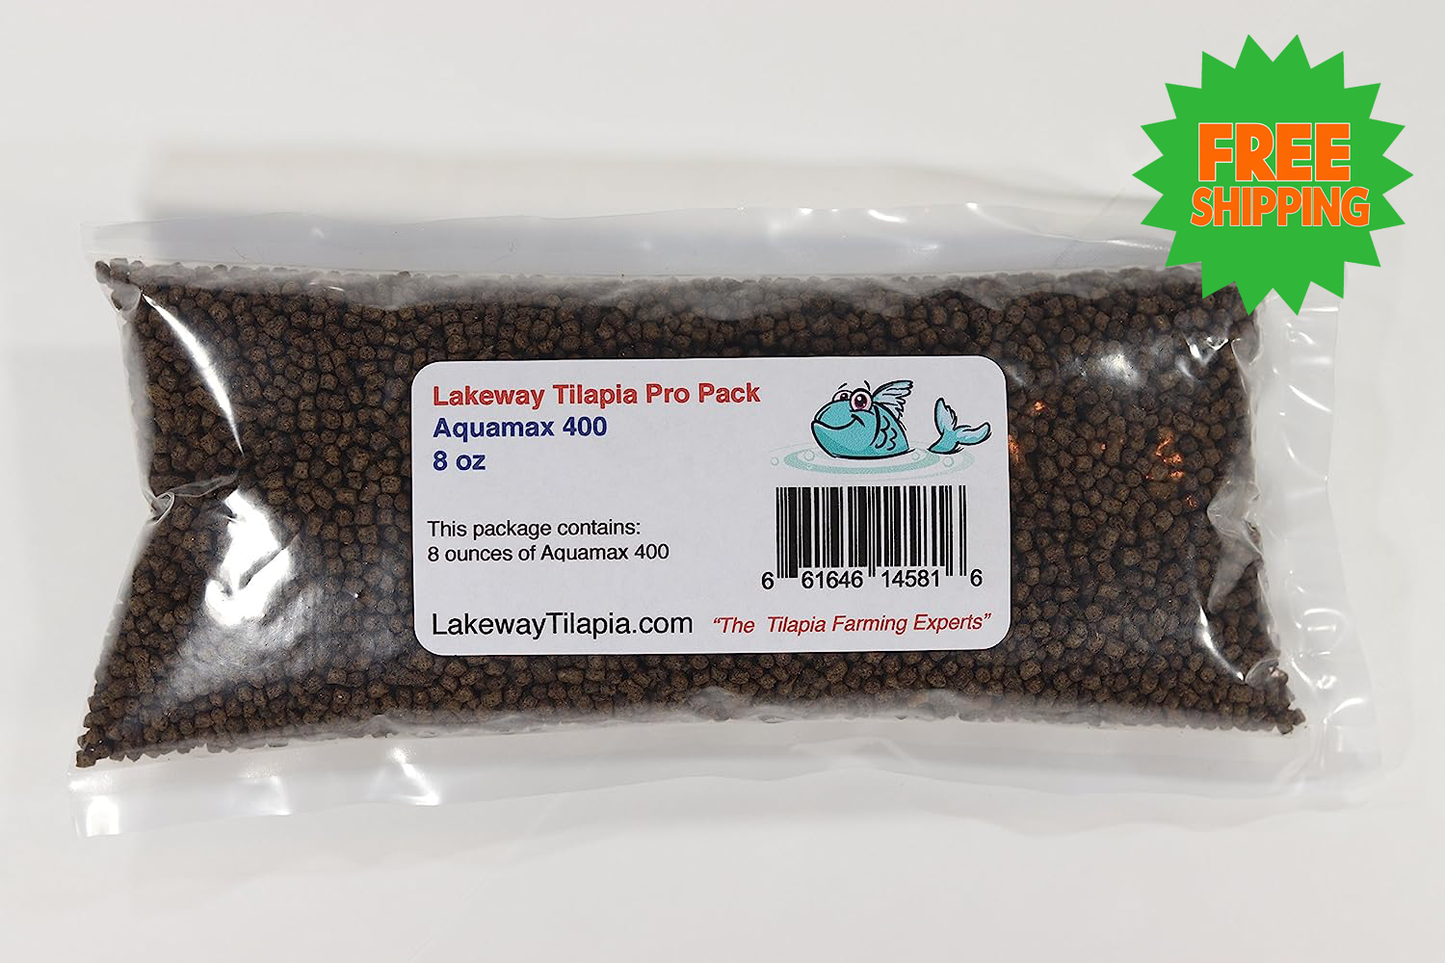 Lakeway Tilapia Pro Pack Aquamax 400